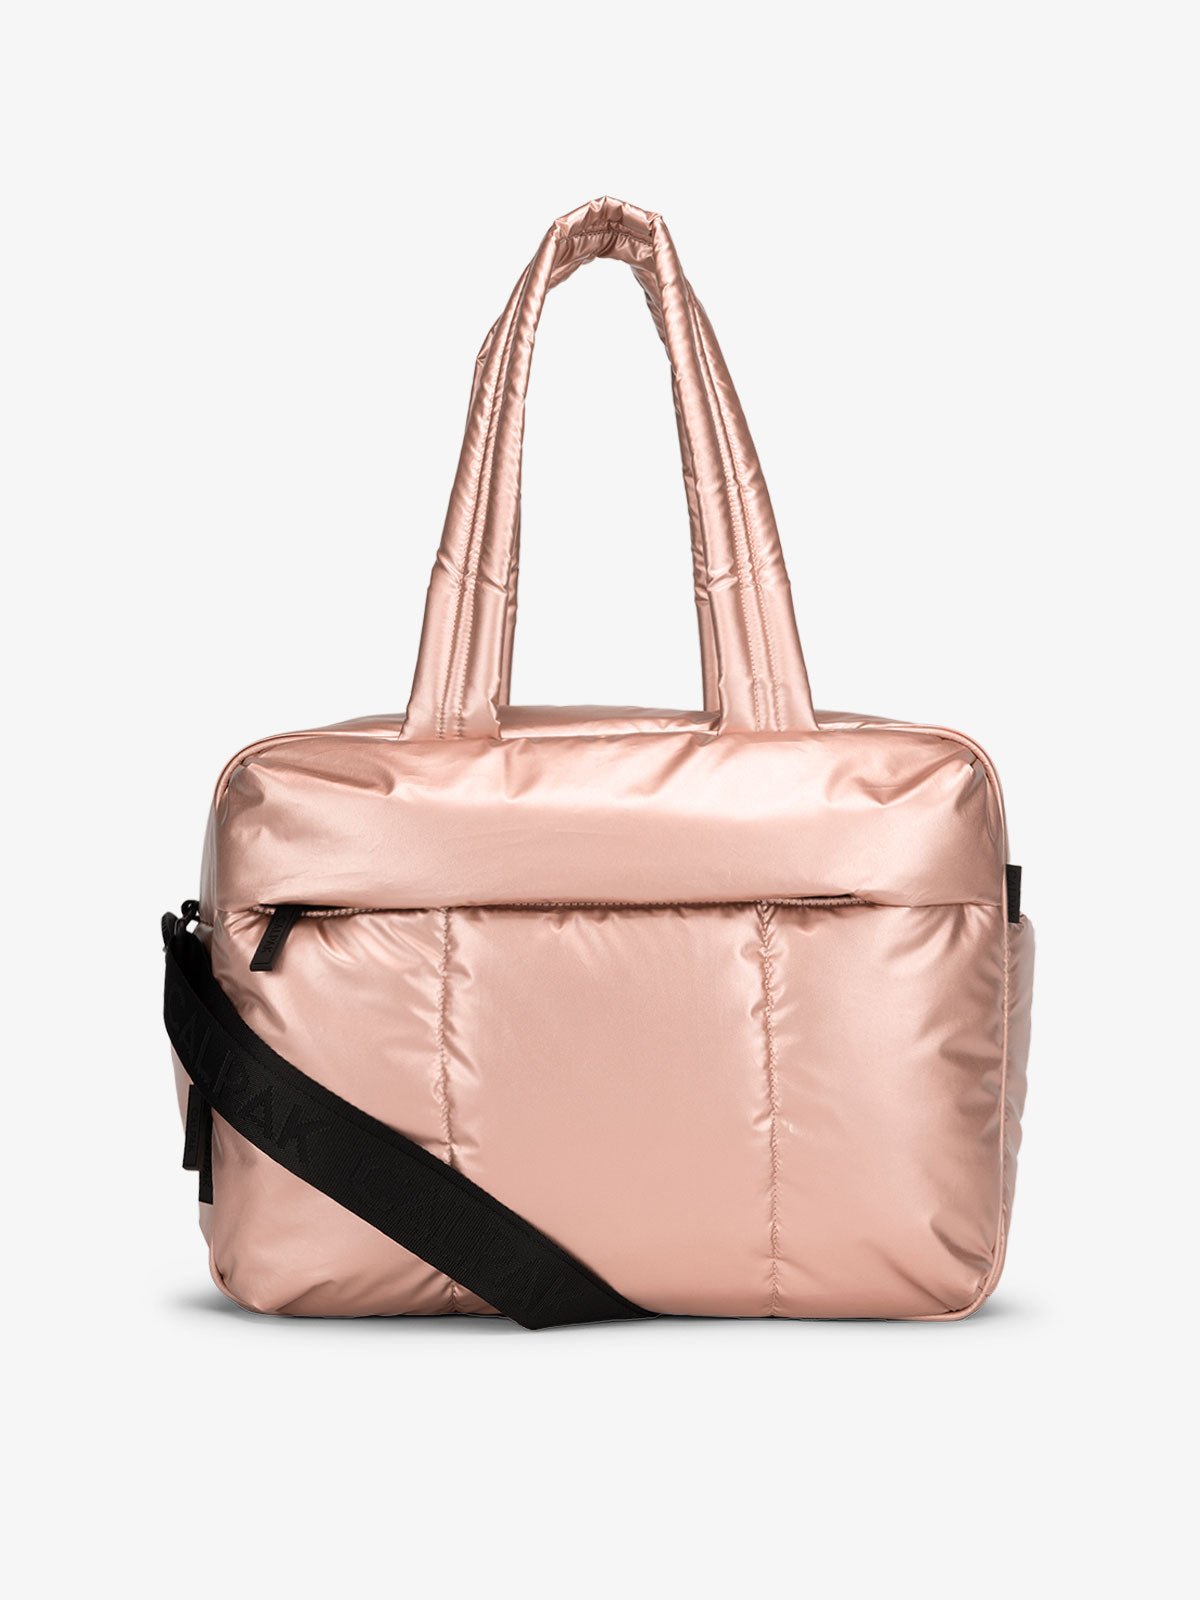 CALPAK Luka Duffel bag in metallic pink rose gold